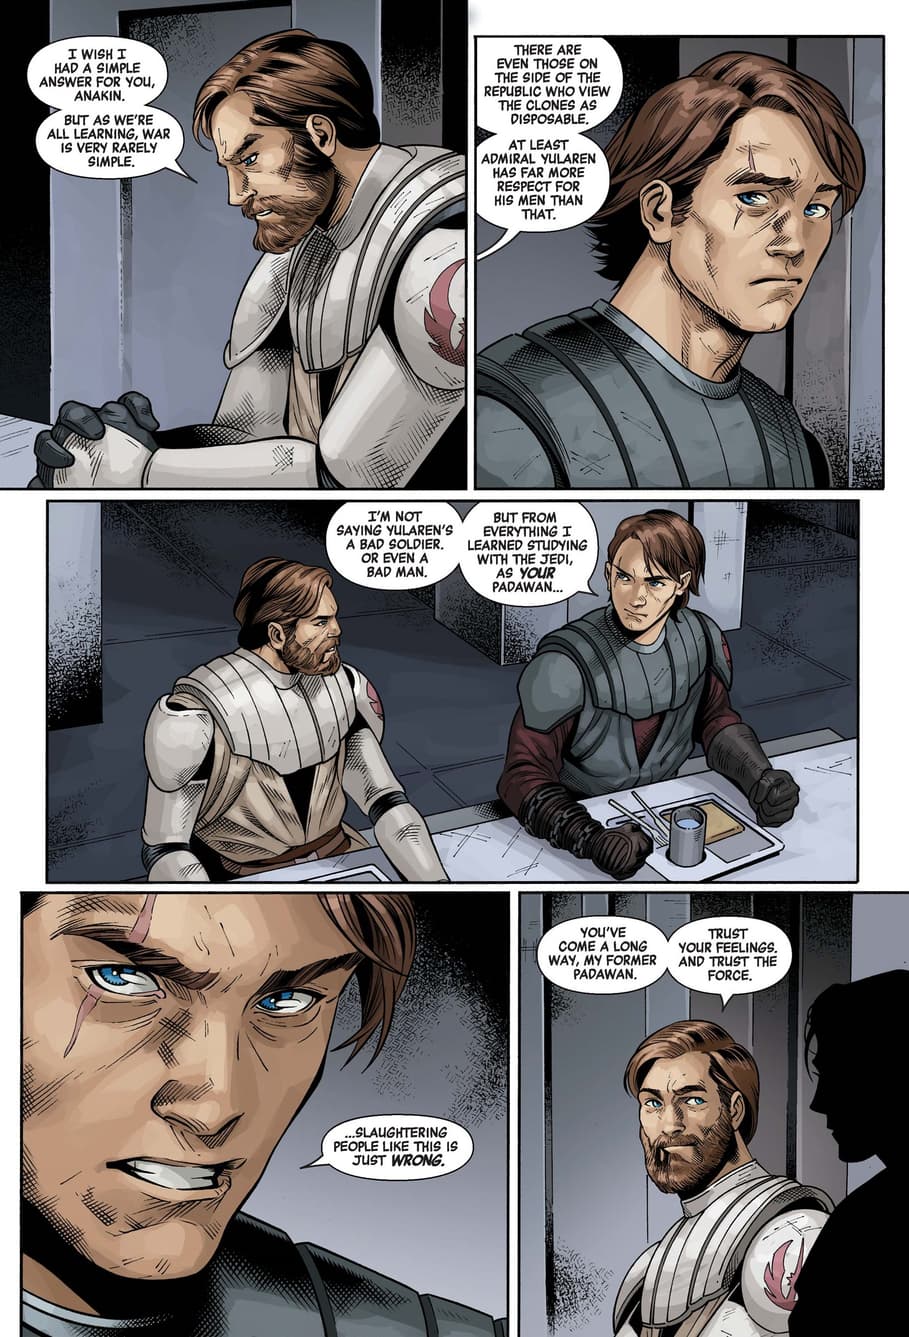 Anakin challenges the cost of war in STAR WARS: AGE OF REPUBLIC - ANAKIN SKYWALKER (2019) #1.